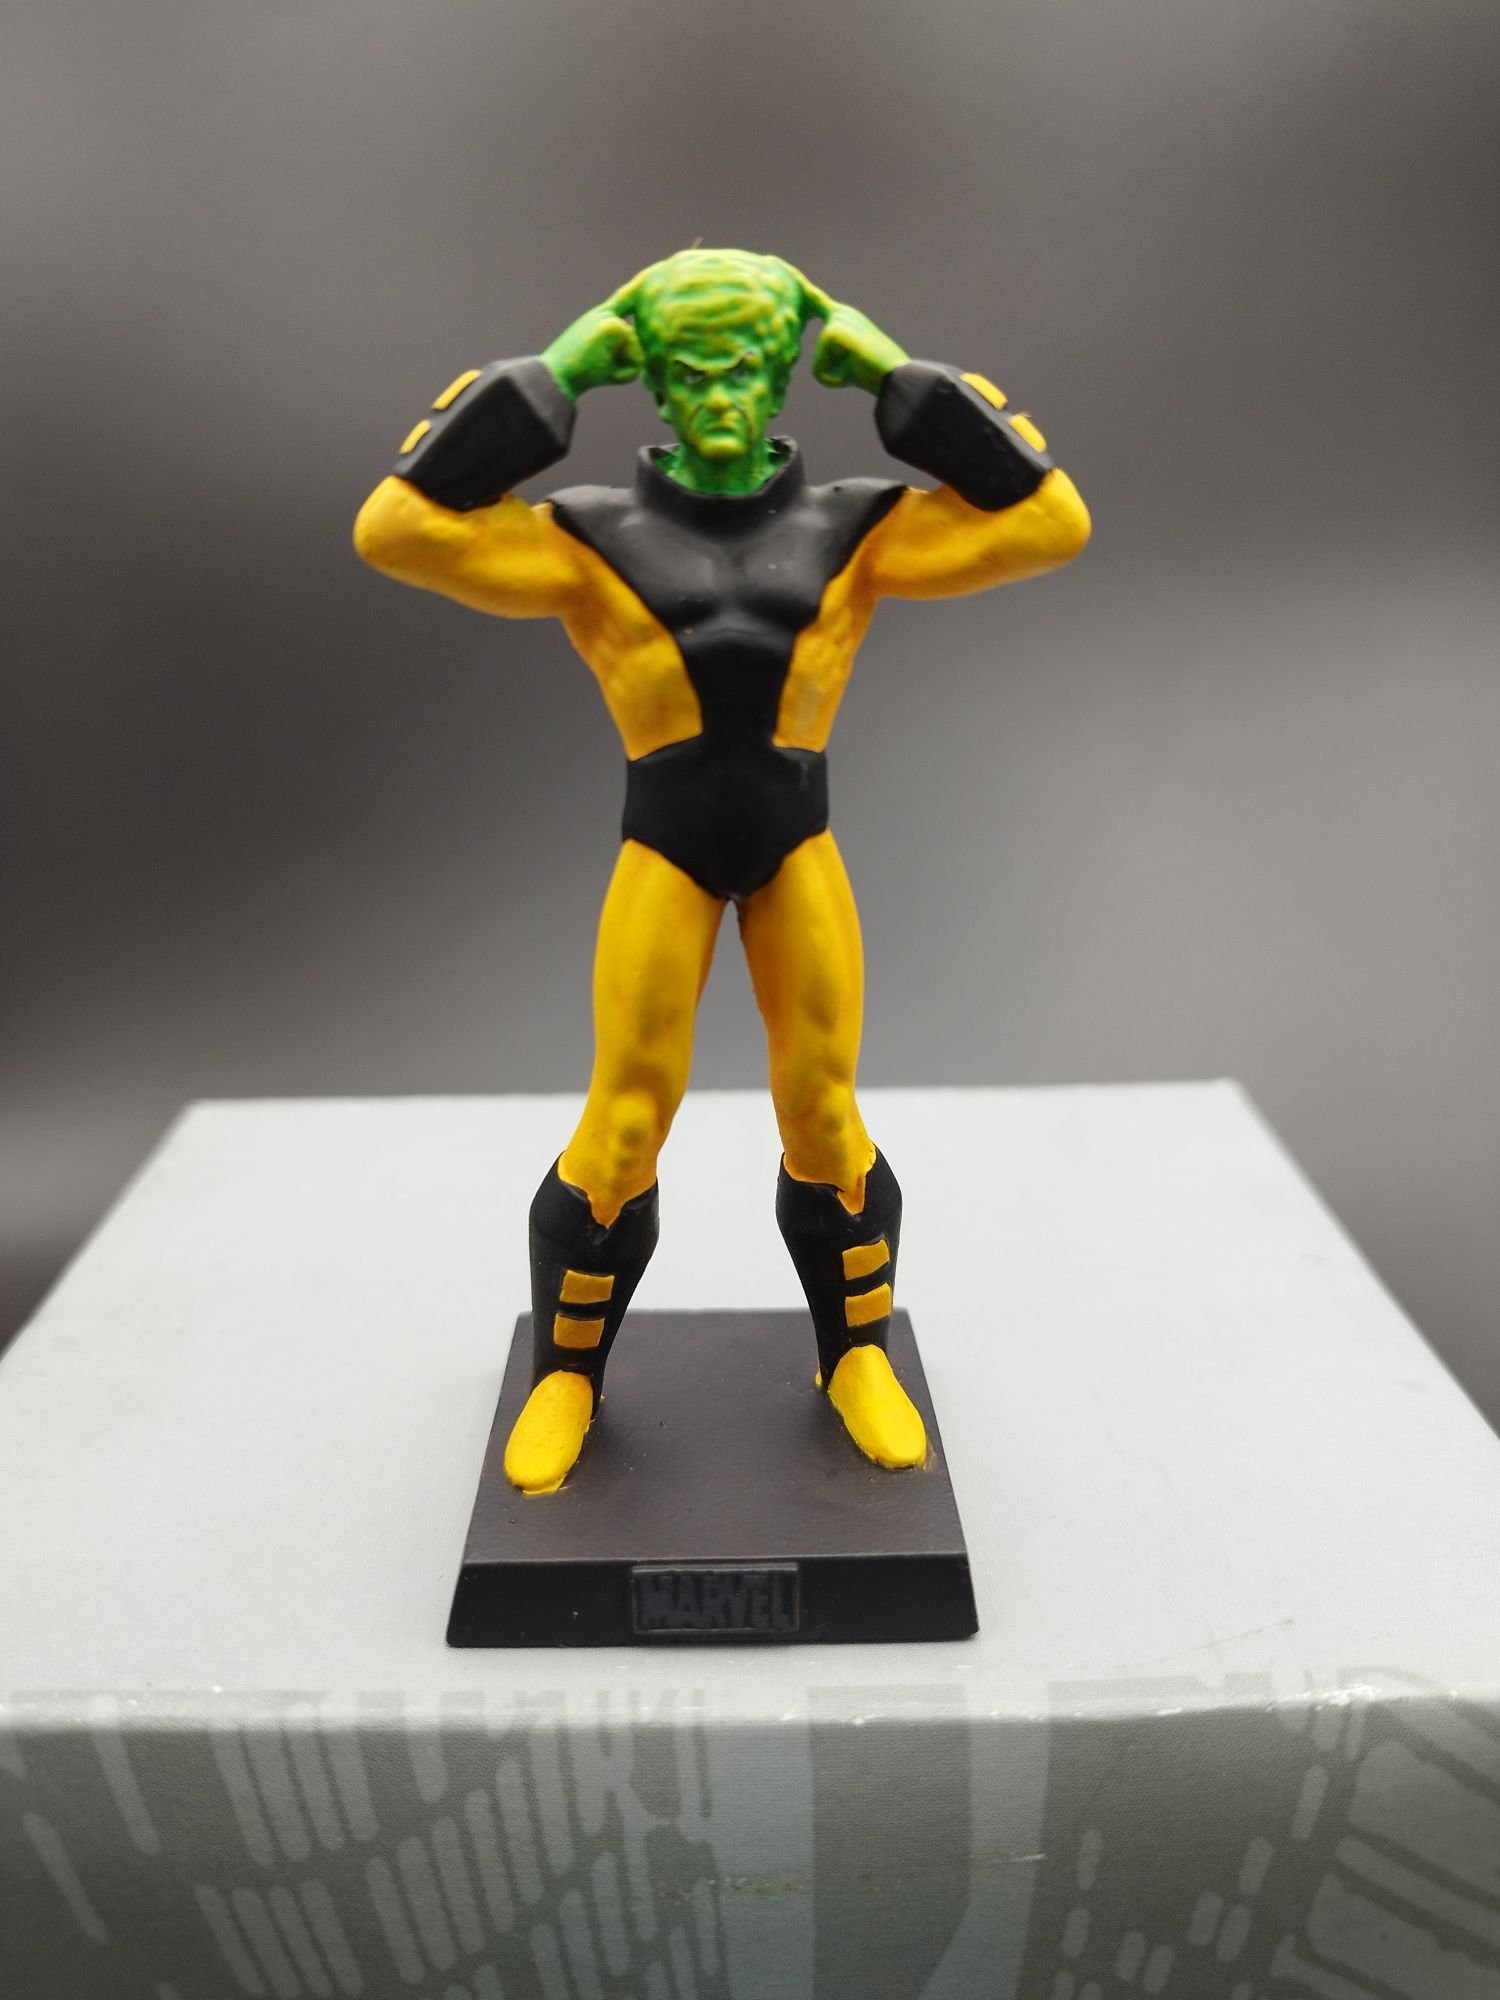 Figurka Marvel klasyczna The Leader #69 ok 8 cm figurka ciężka ołowian